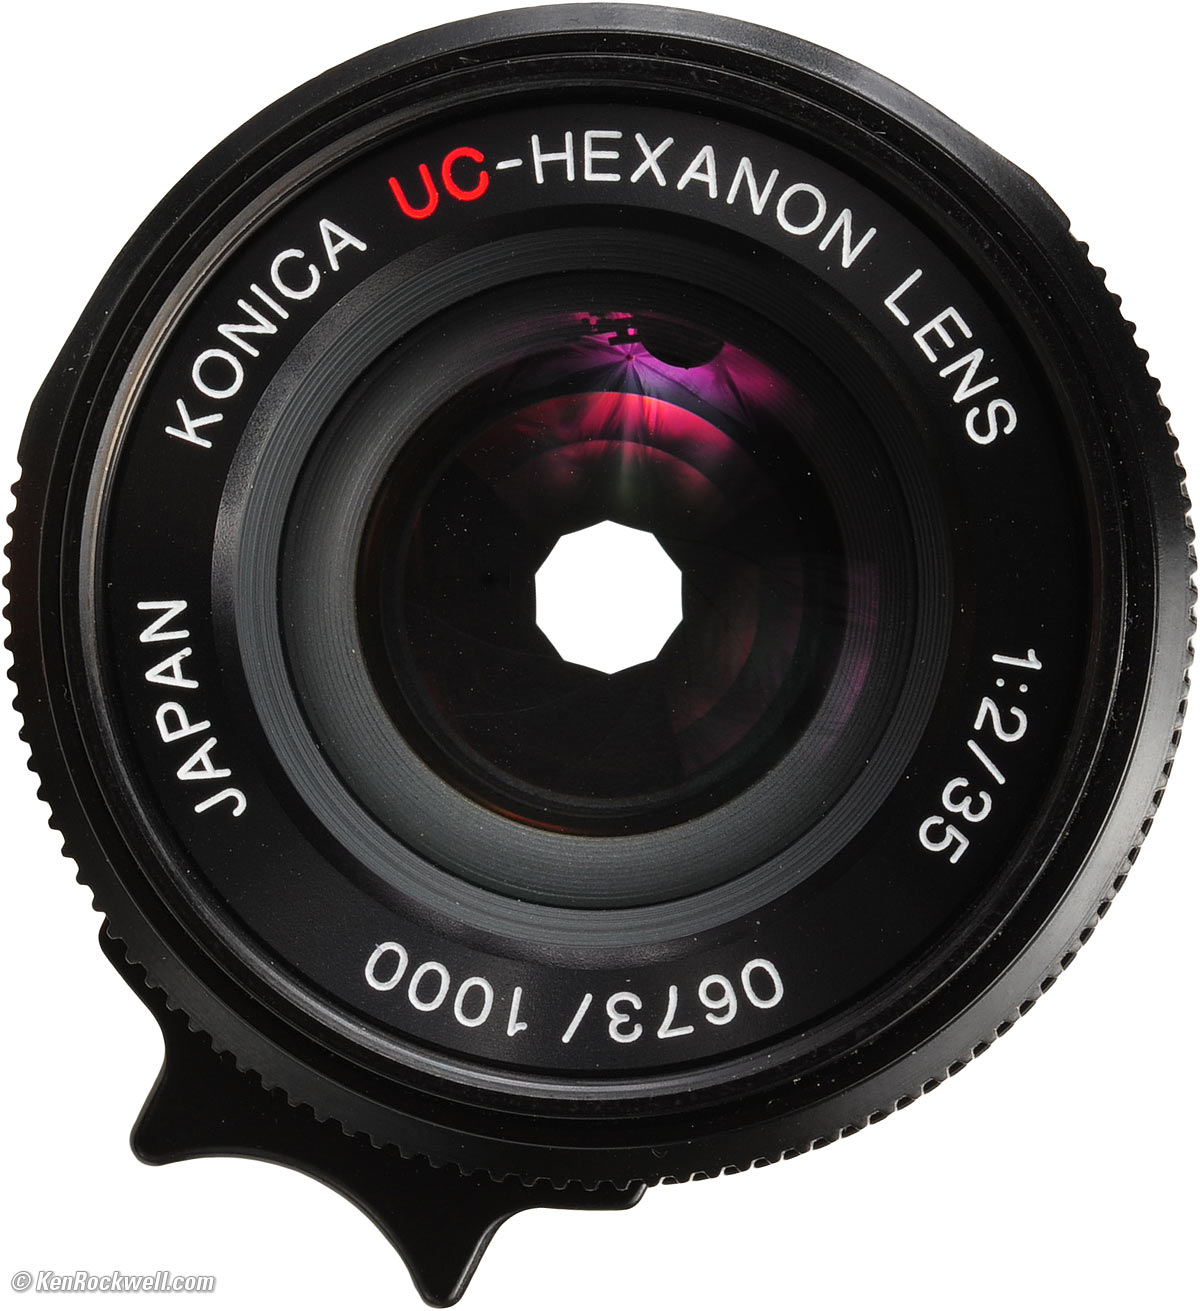 Konica UC-Hexanon 35mm f/2